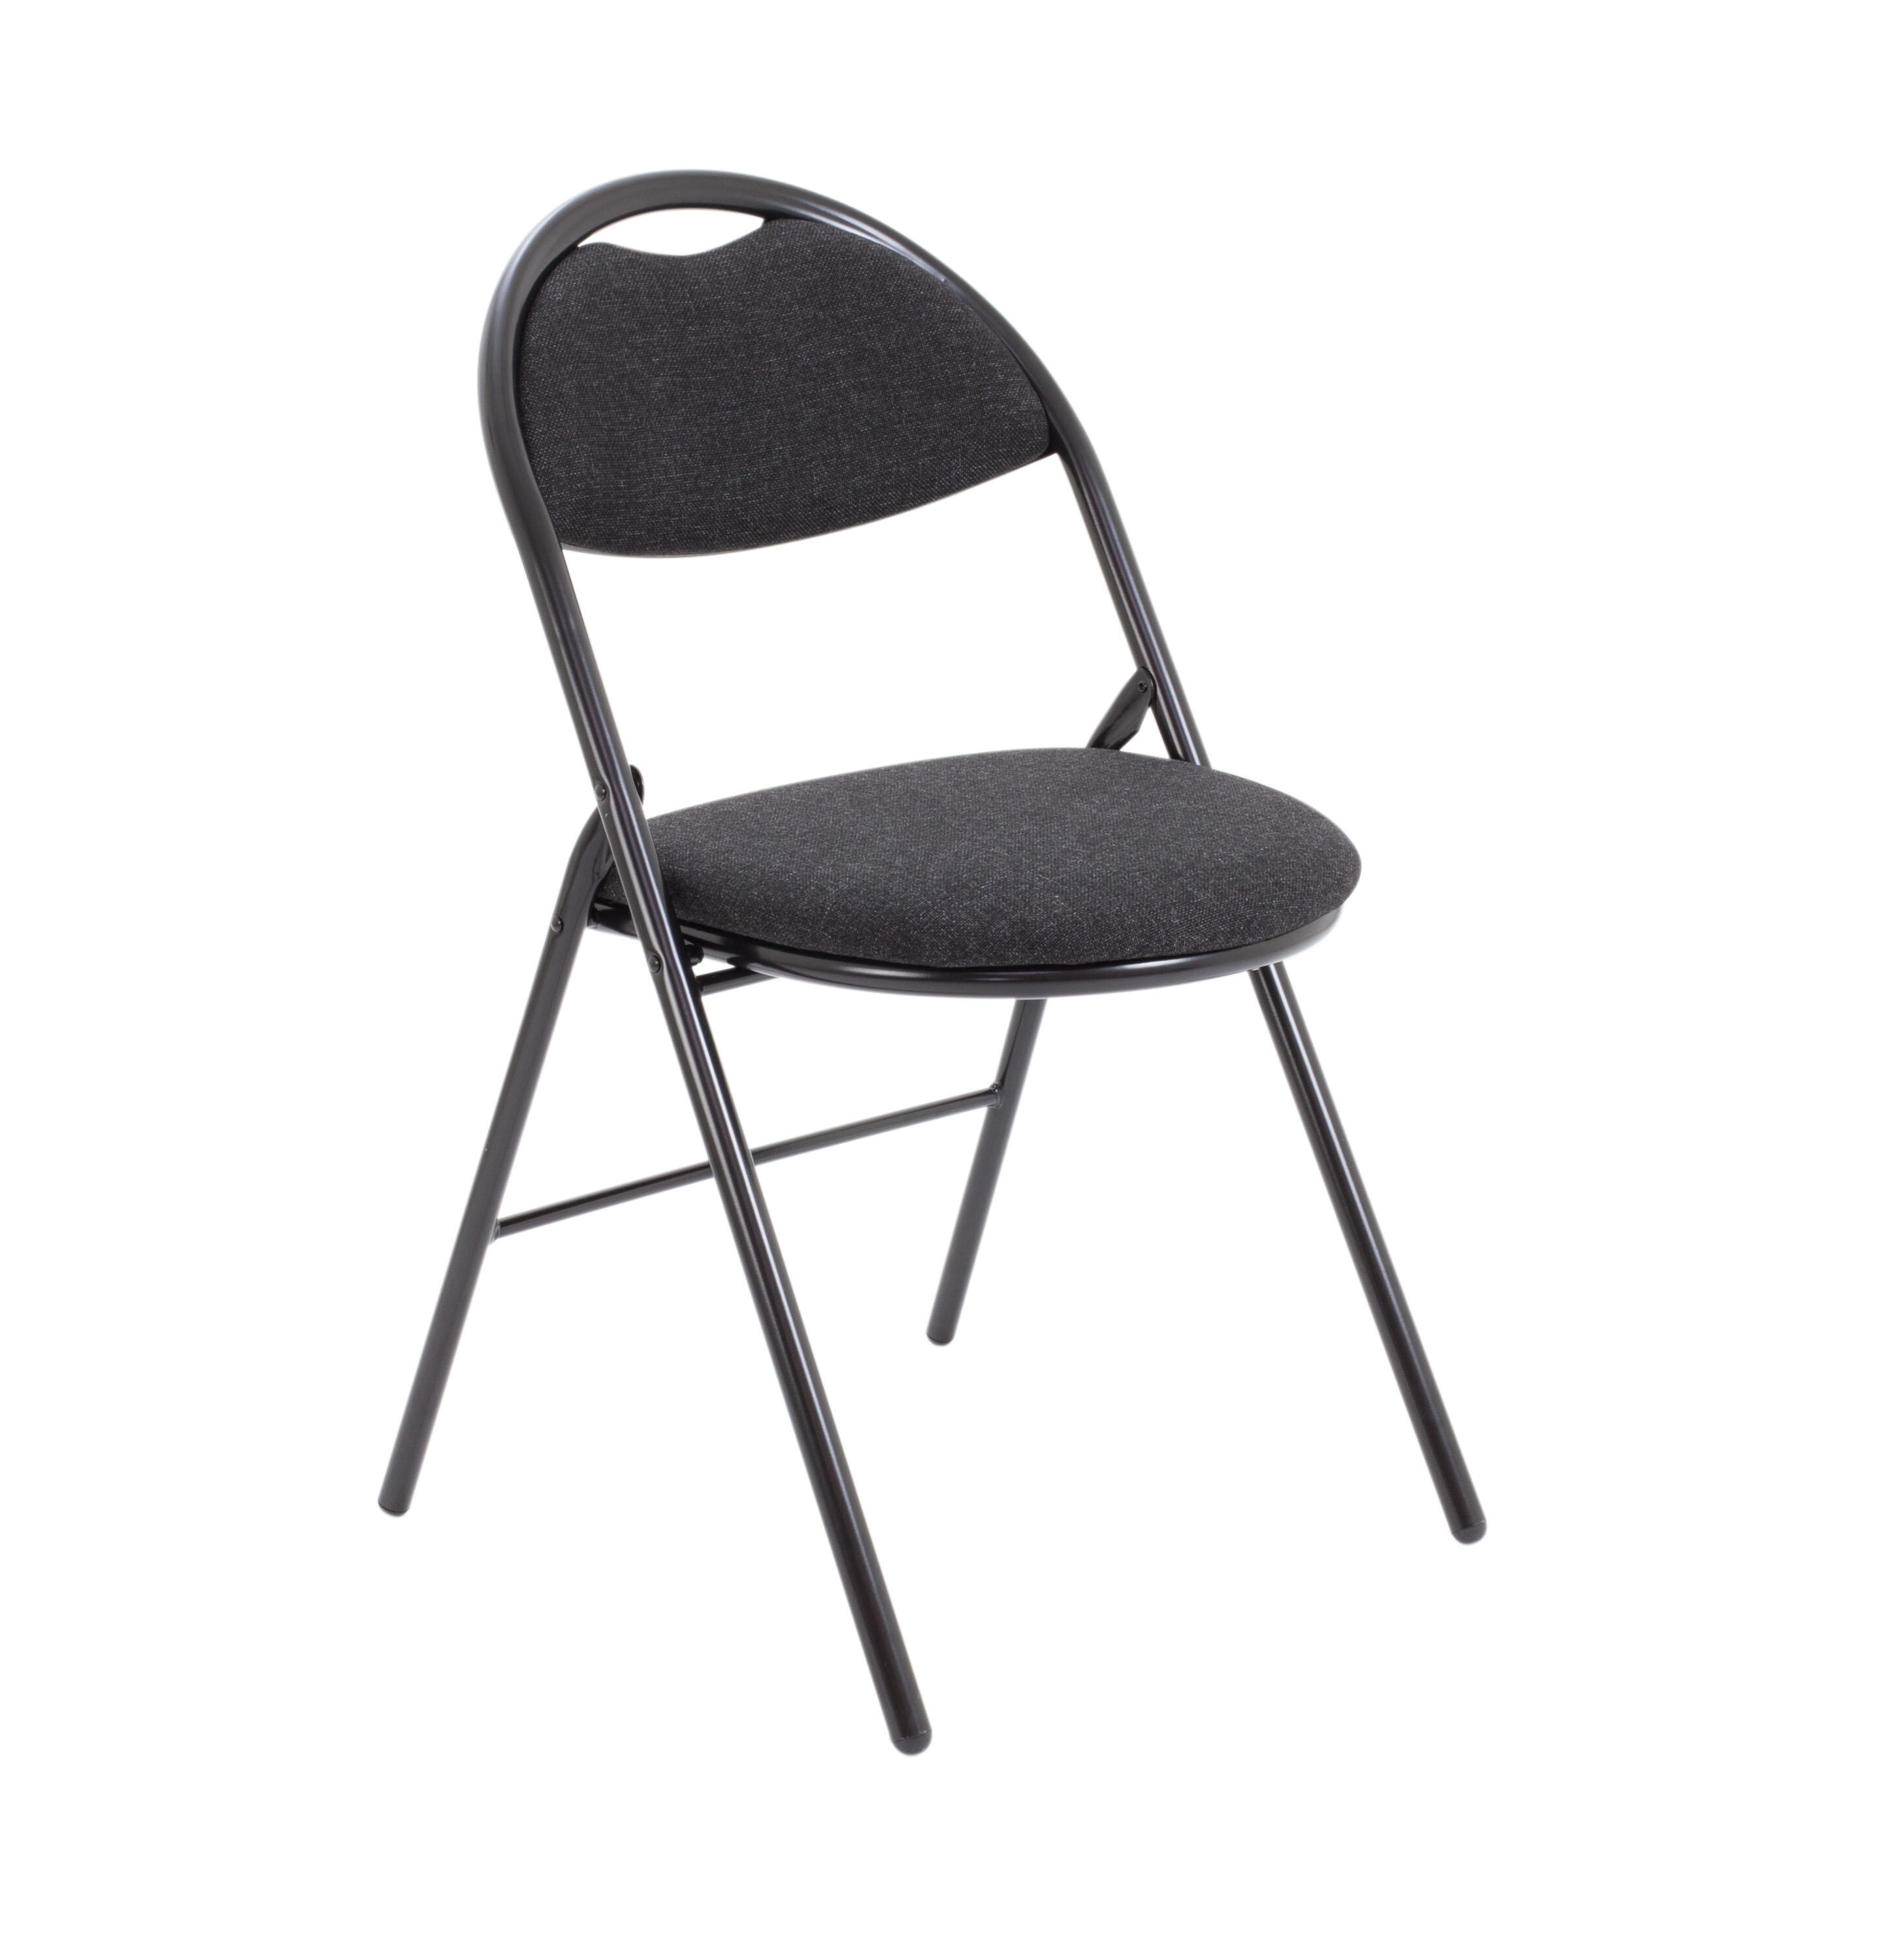 Brayden Studio Sienna Padded Folding Chair Wayfair Co Uk